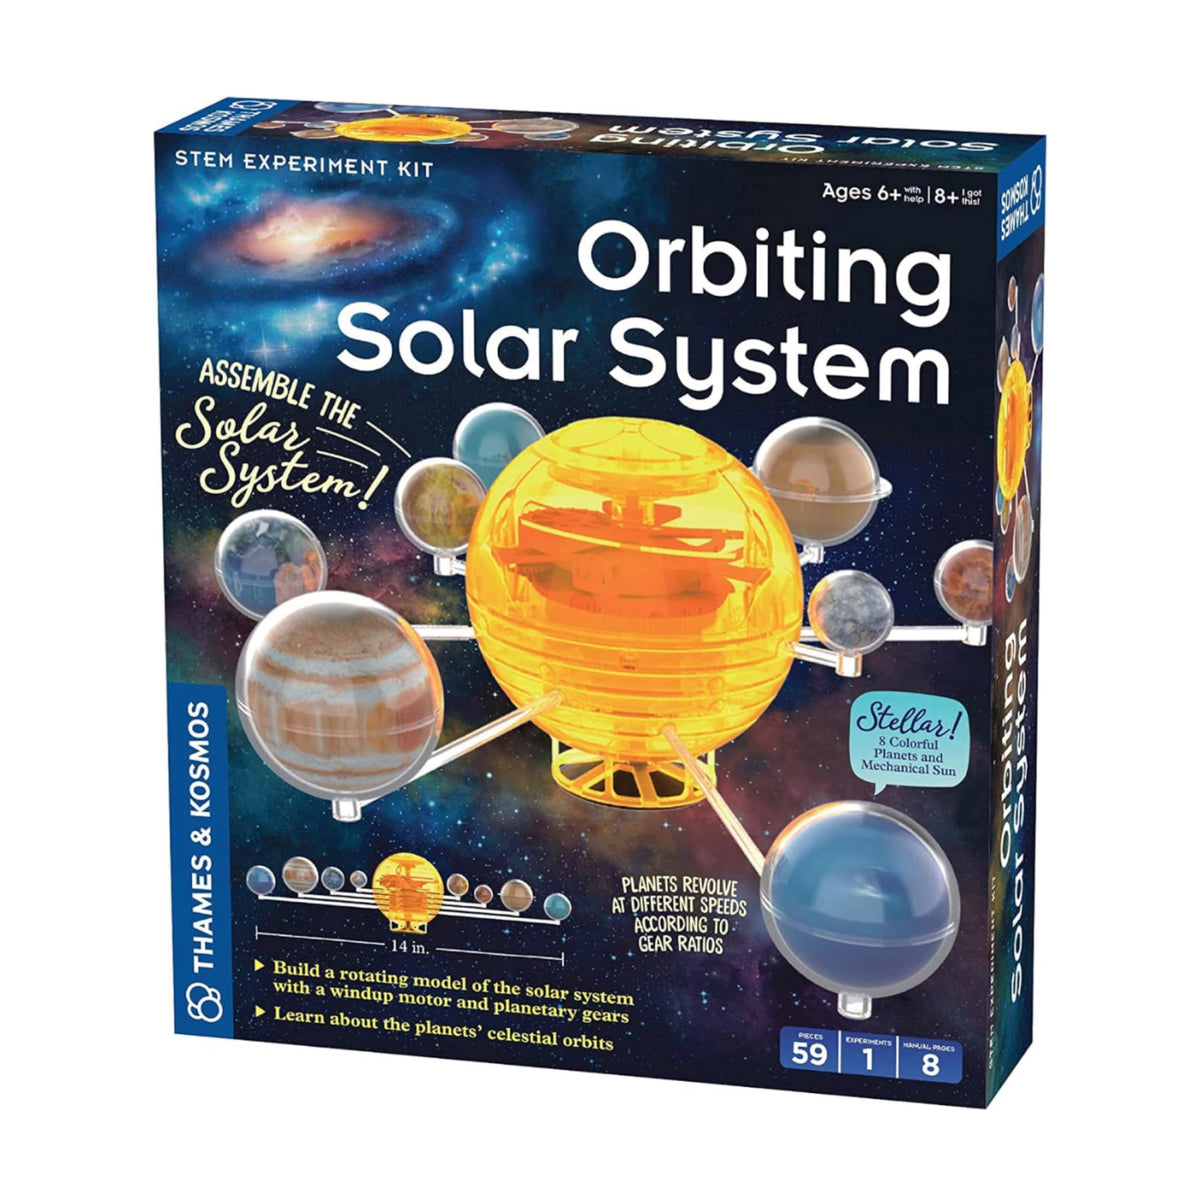 Orbiting Solar System Model – SpaceTrader Gift Shop